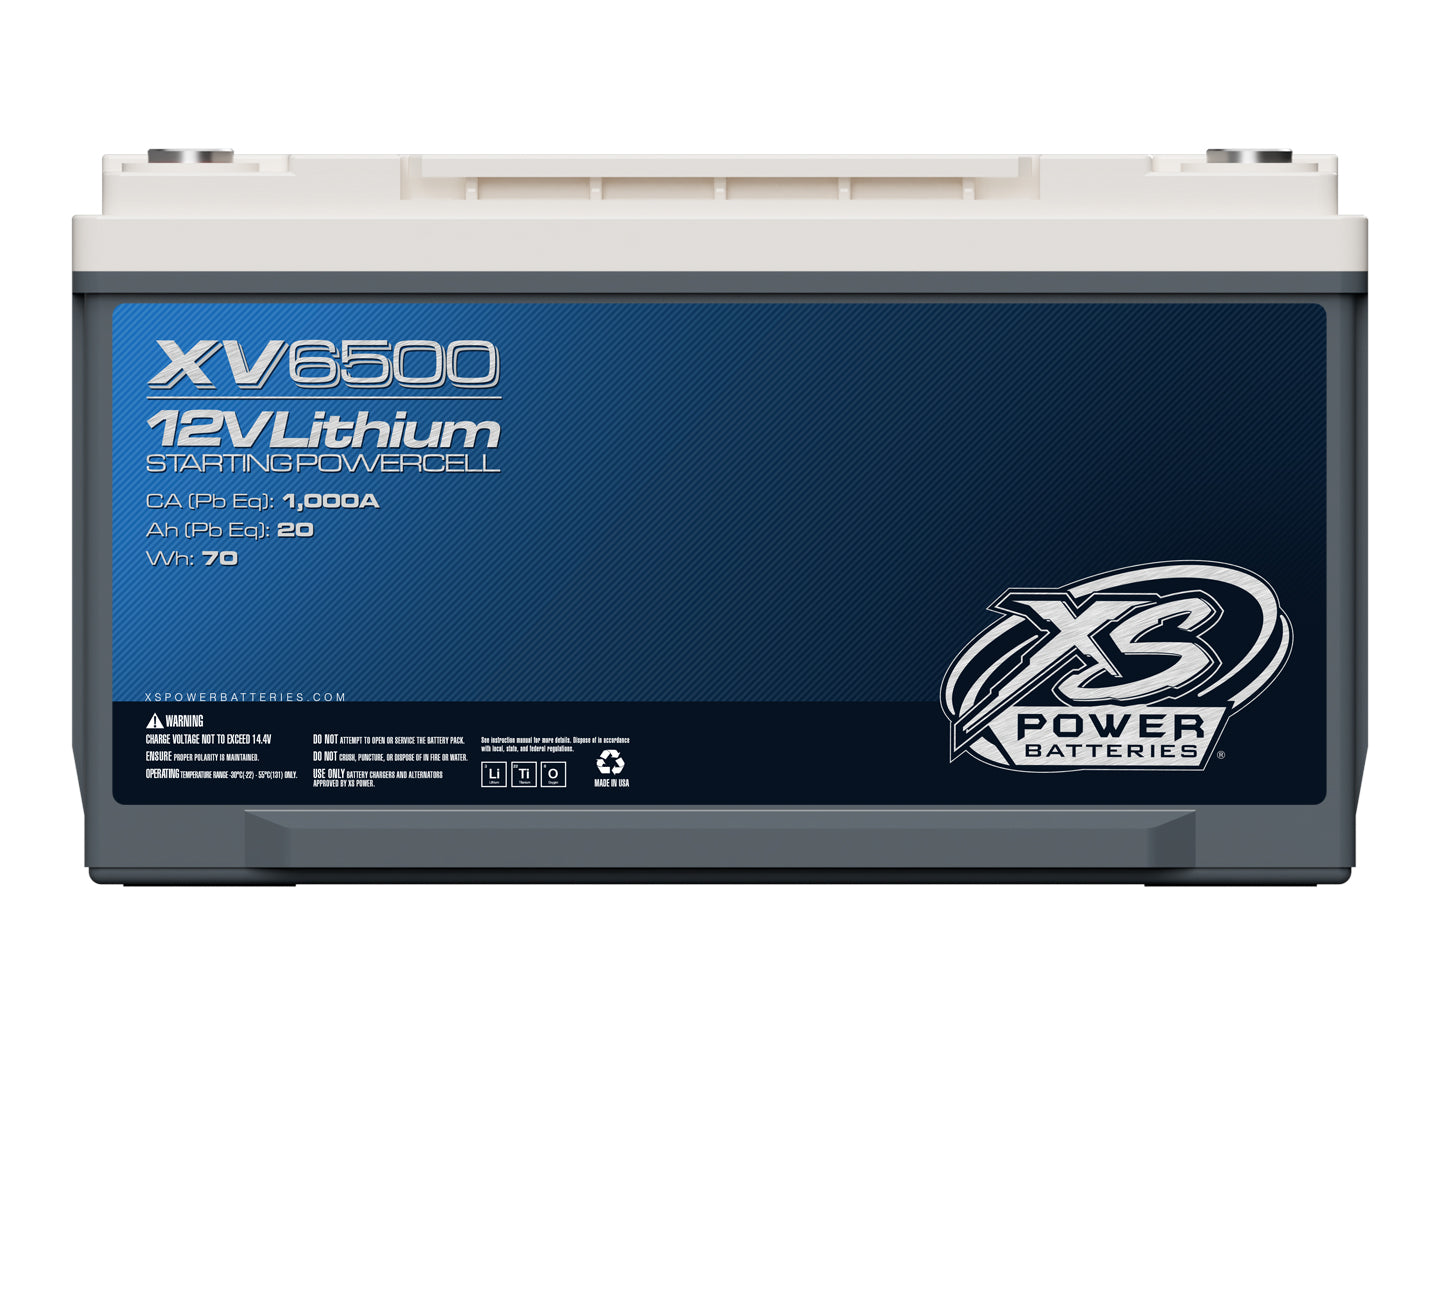 XV6500 XS Power 12VDC Group 65 Lithium LTO Underhood-Safe Battery 1500W 70Wh